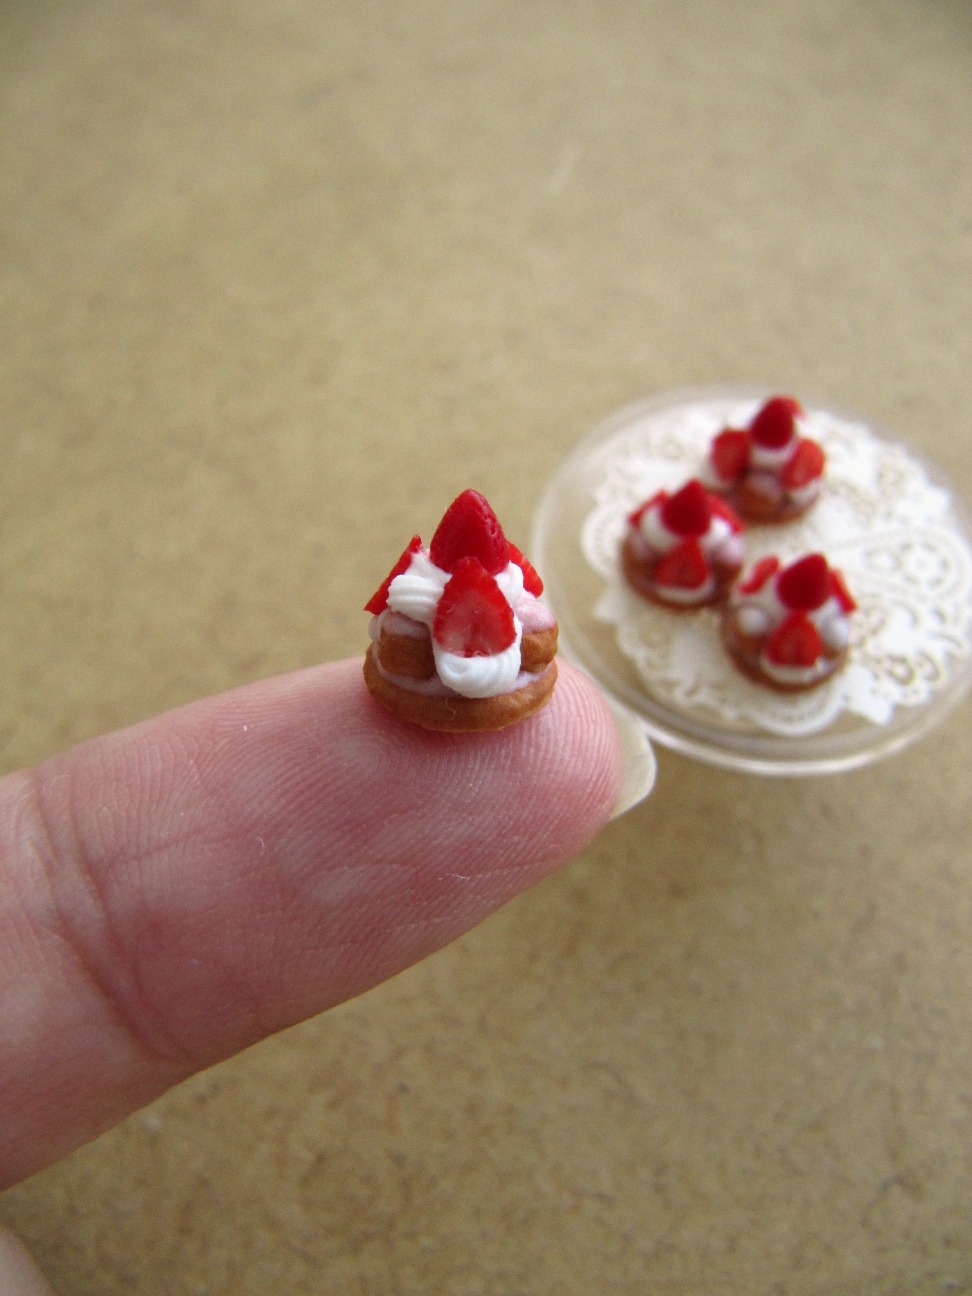 Snowfern Clover - miniature foods 1:12, 1:24 & 1:48 dollhouse scale ...